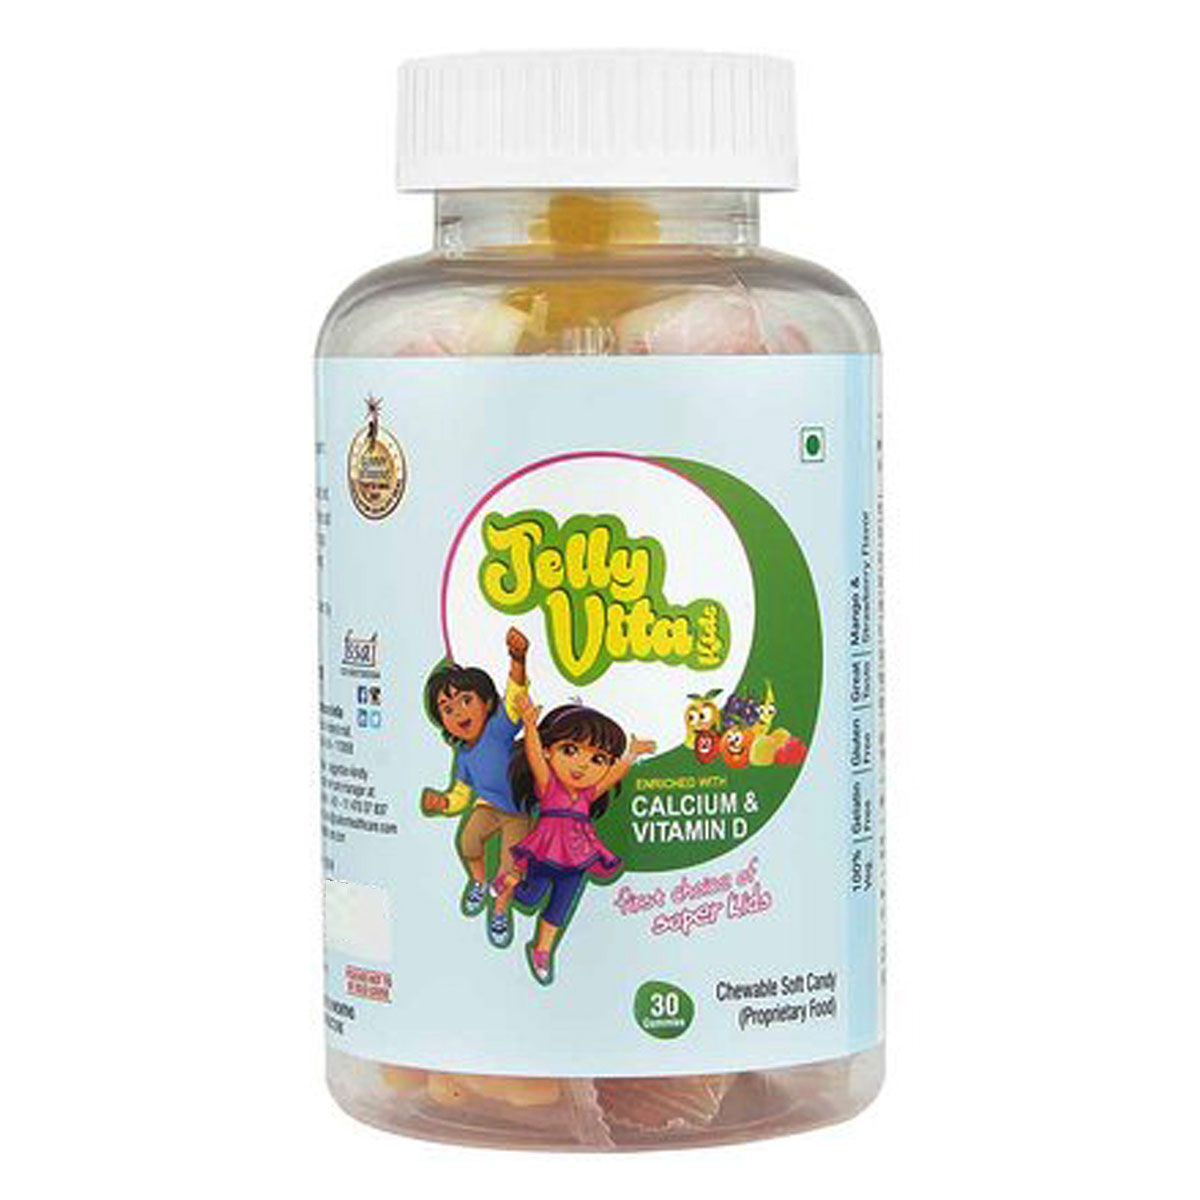 Buy Jelly Vita Kids Calcium & Vitamin D Gummies, 30 Count Online